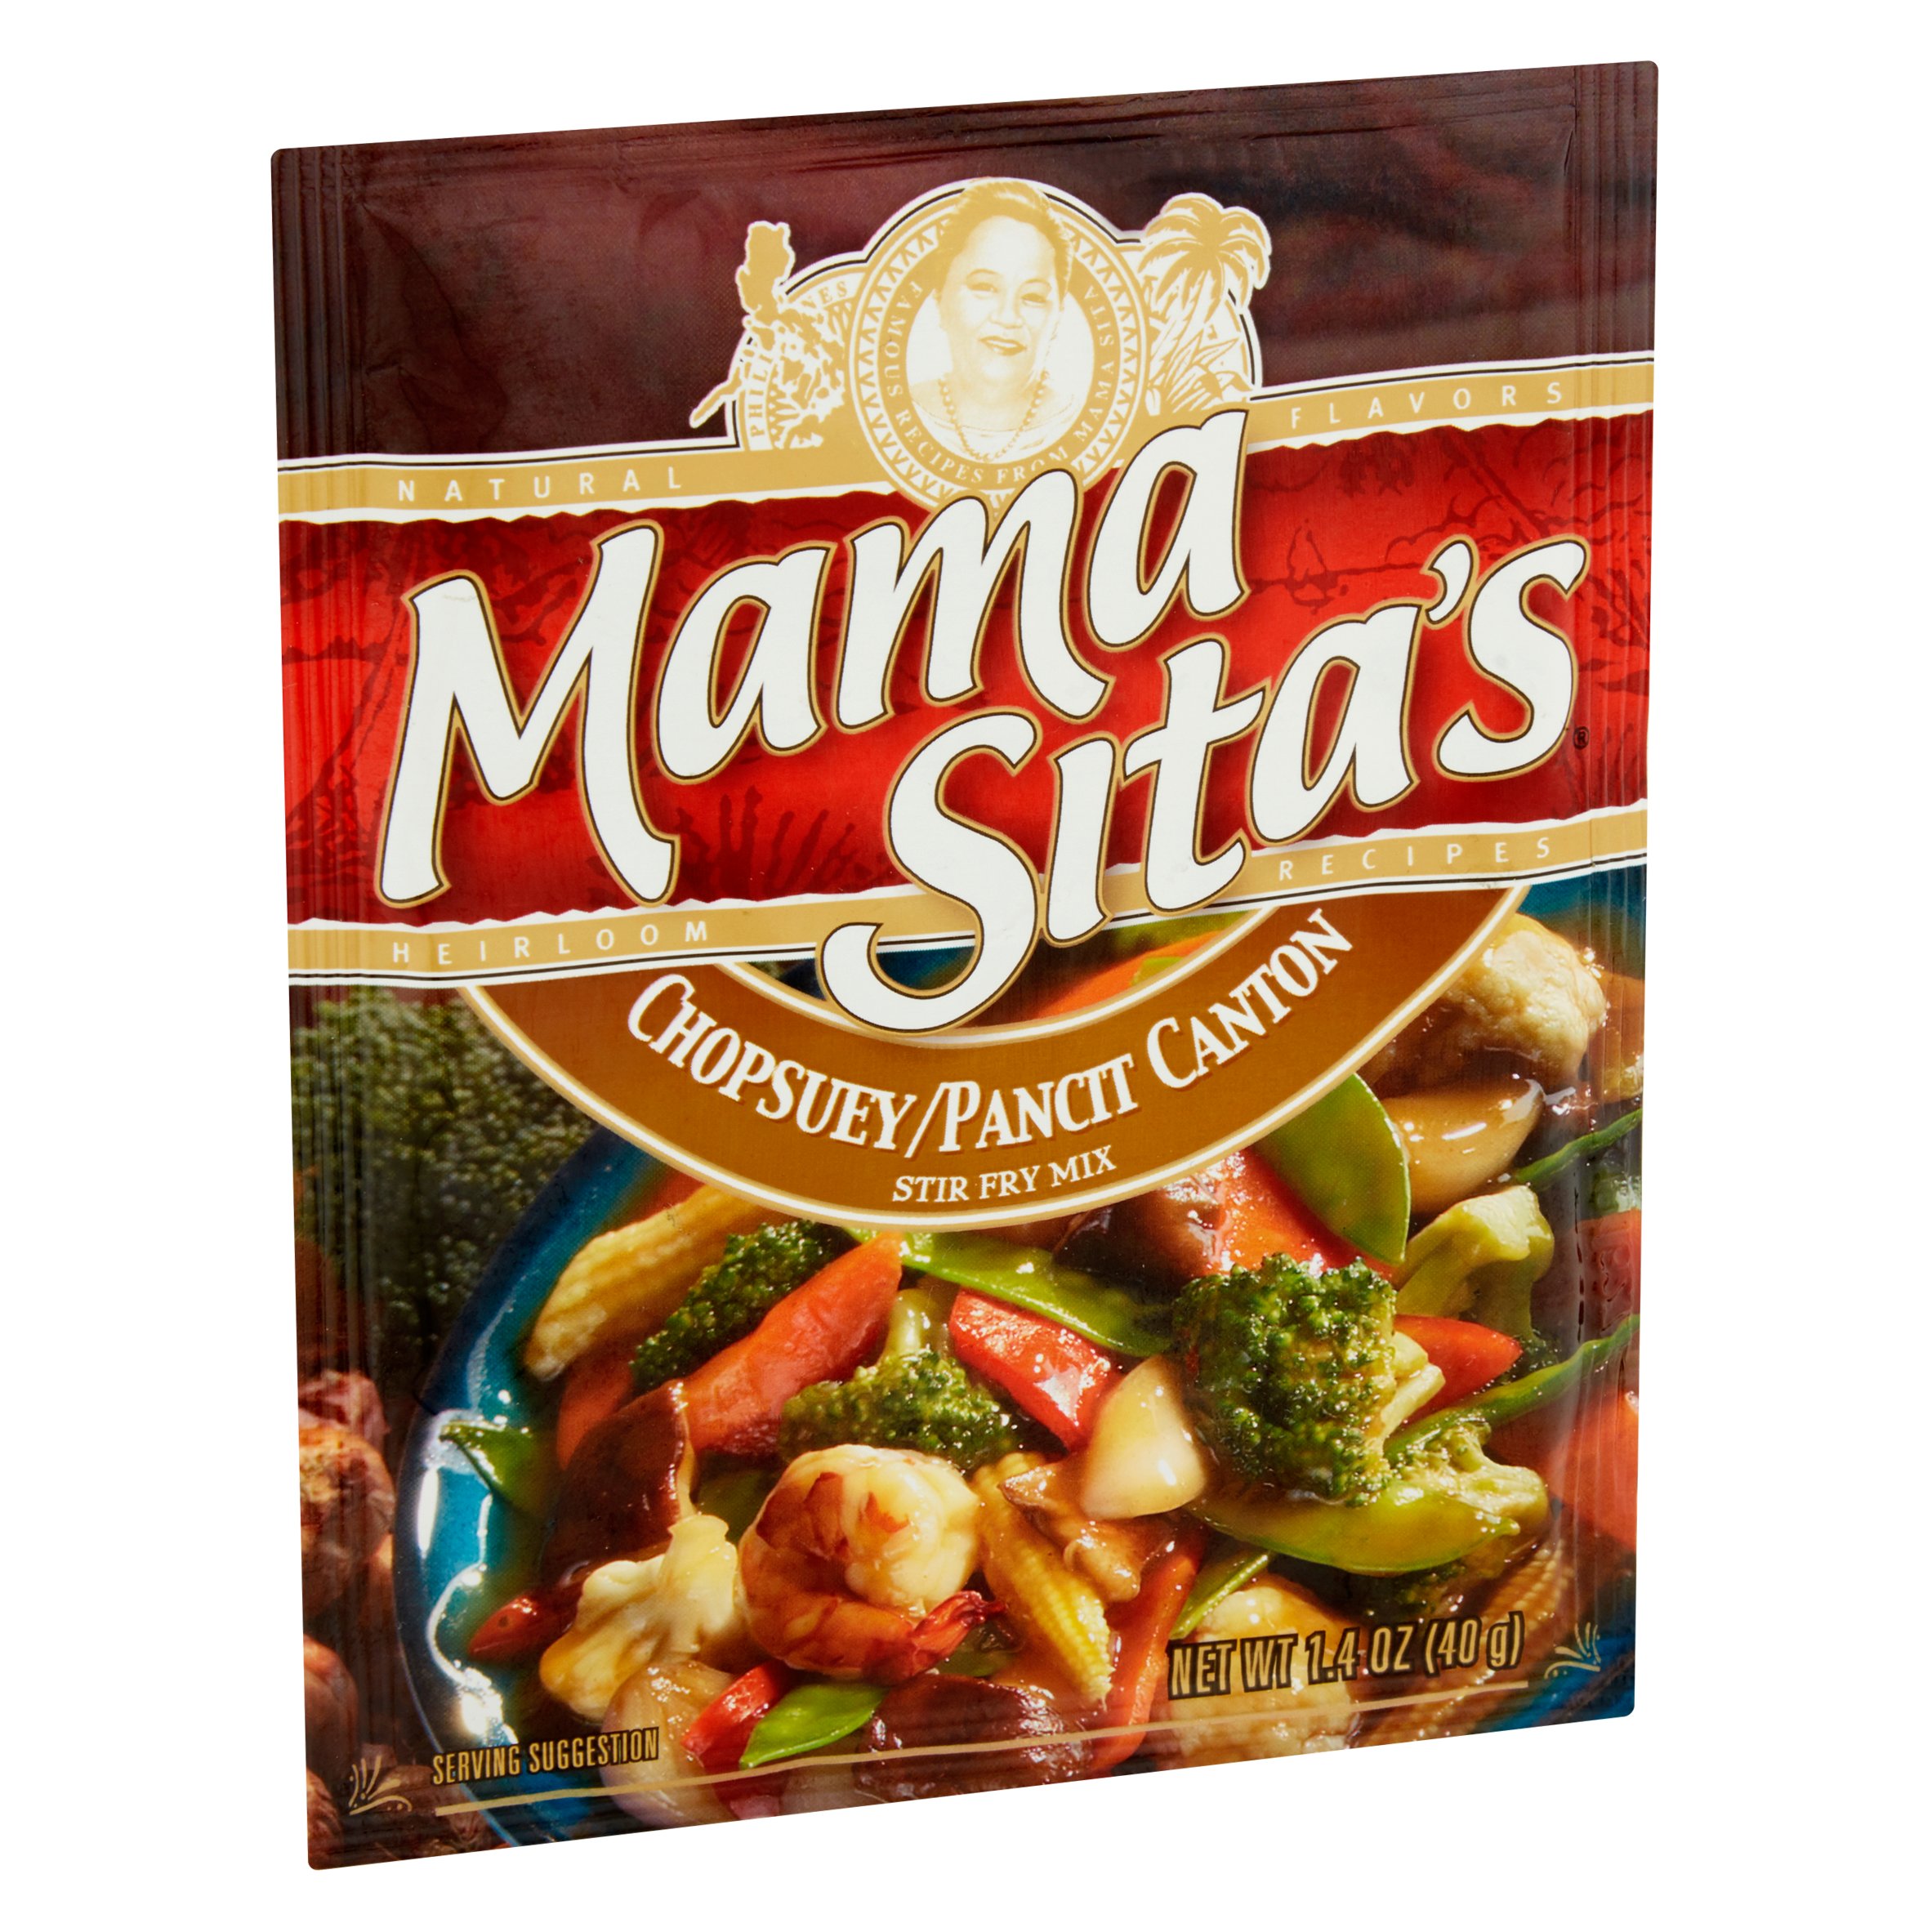 Mama Sitas Chopsuey Stir Fry Mix, 1.4 oz - image 2 of 5